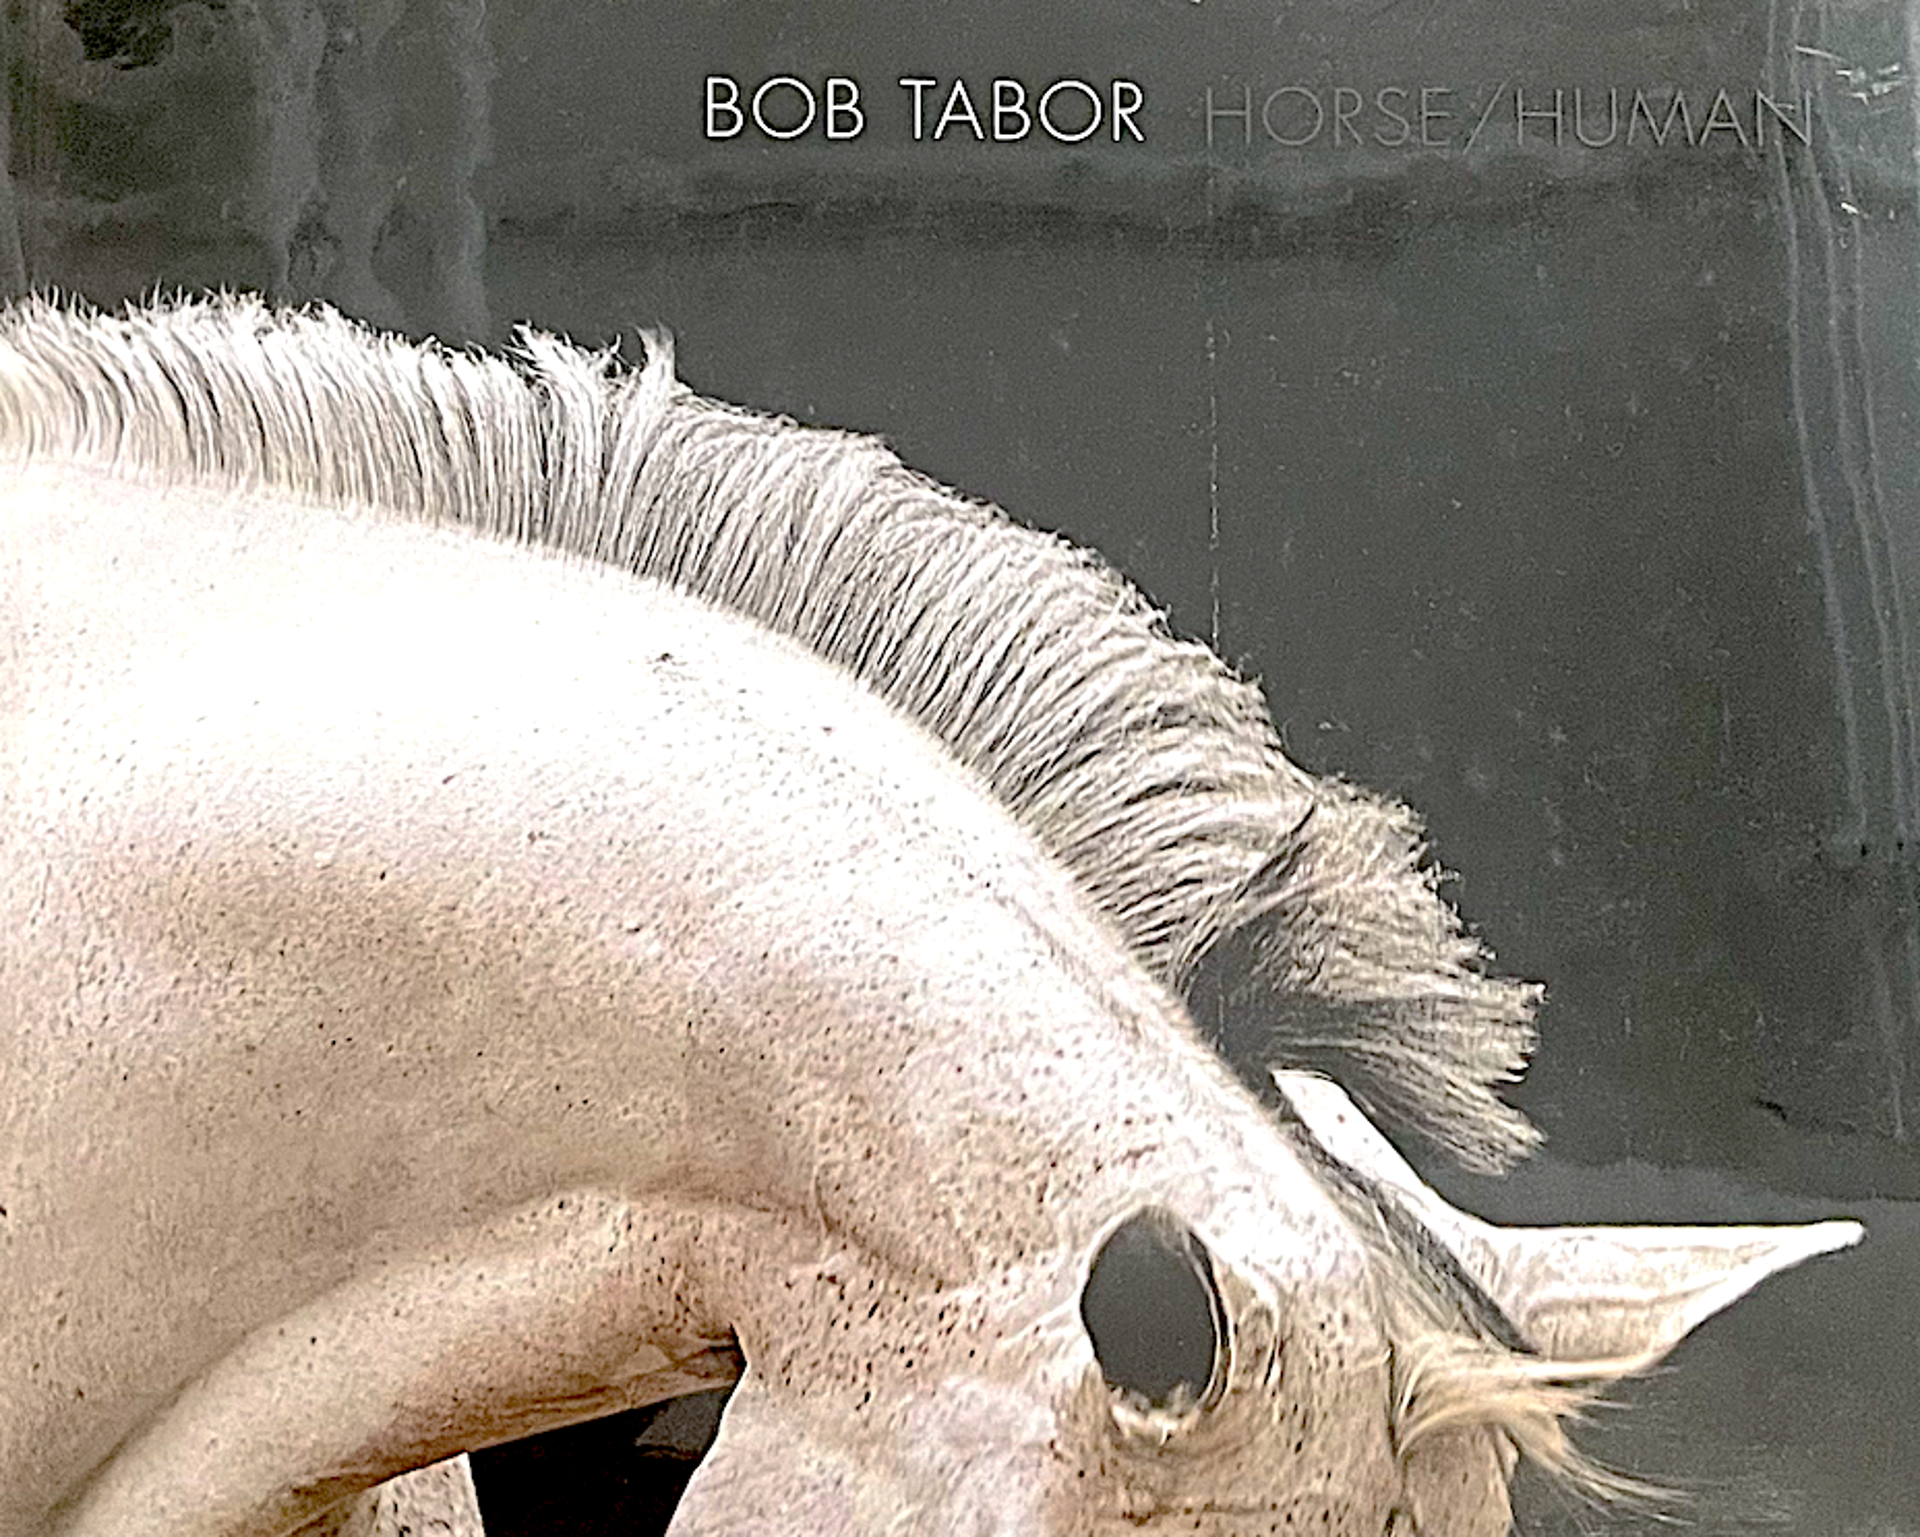 Horse/Human by Bob Tabor